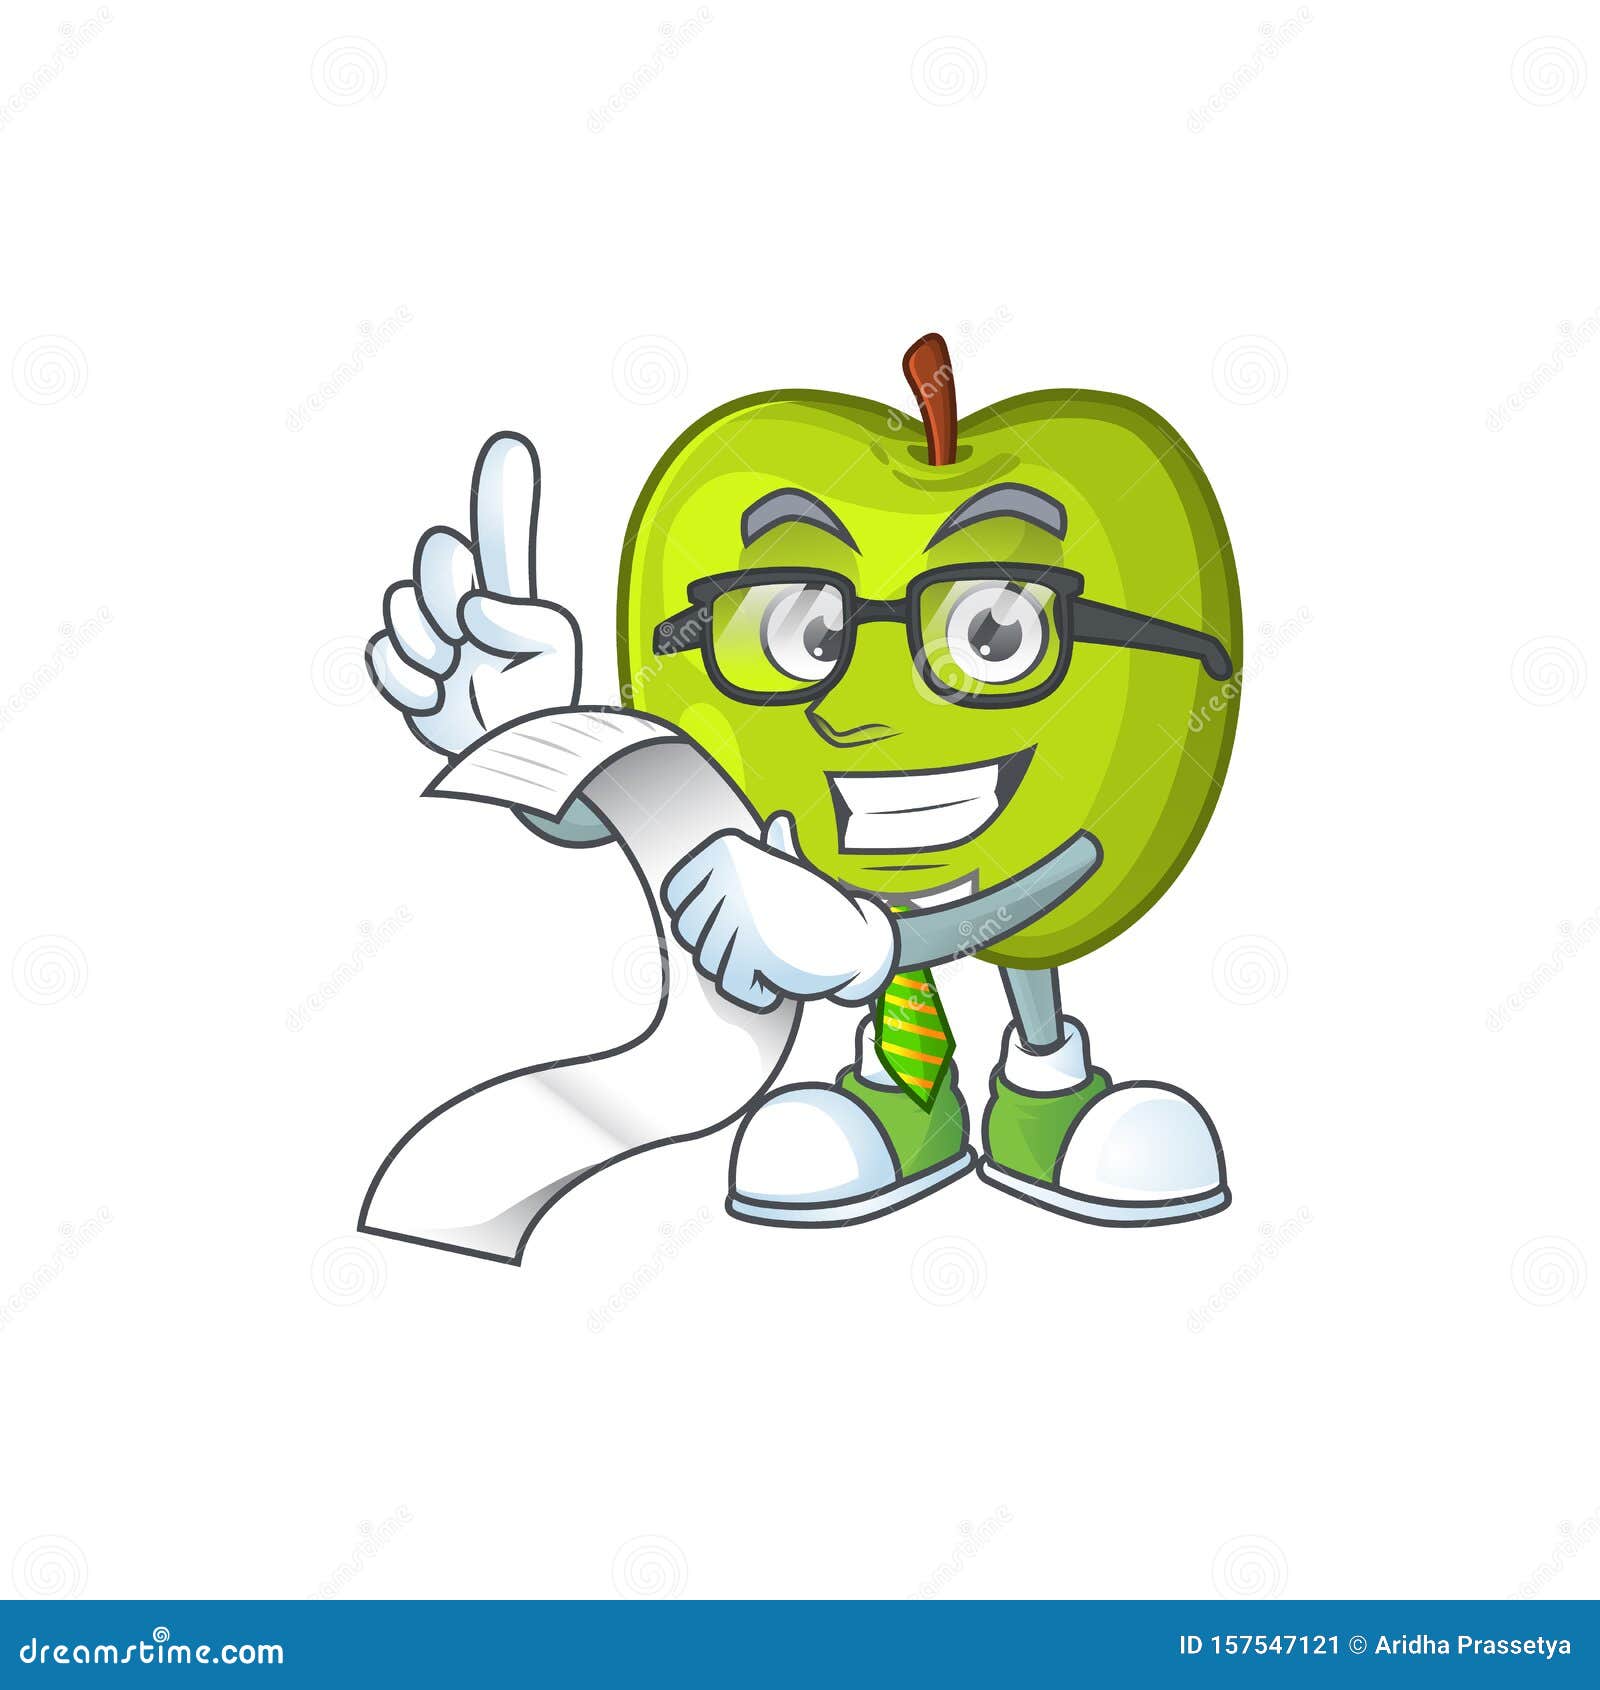 With Menu Granny Smith Green Apple Cartoon Mascot Stock Vector -  Illustration of healthy, chef: 157547121